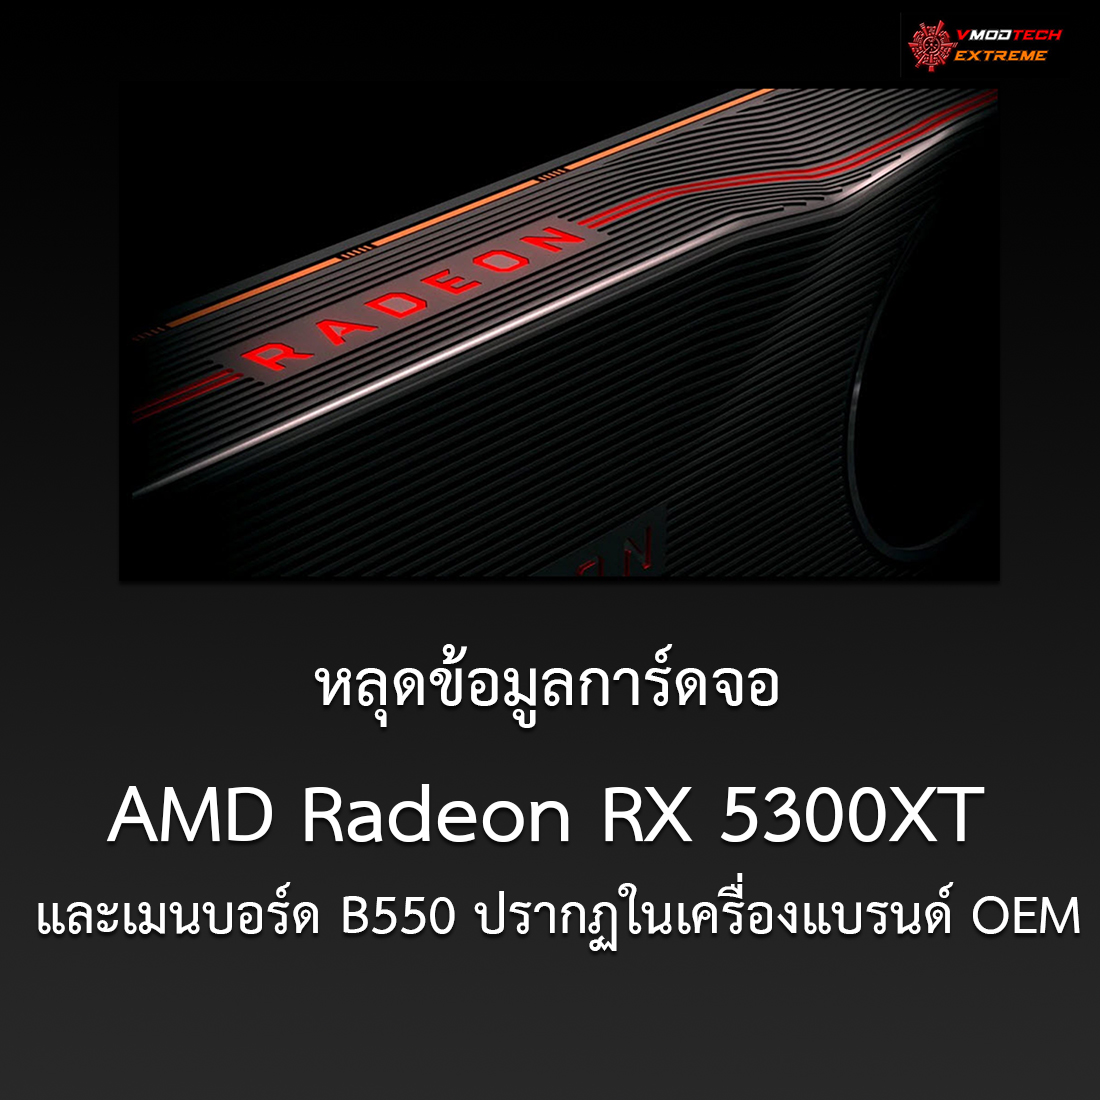 amd radeon rx 5300xt หลุดข้อมูลการ์ดจอ AMD Radeon RX 5300XT 4GB GDDR5 และเมนบอร์ด B550 ปรากฏในเครื่องแบรนด์ OEM